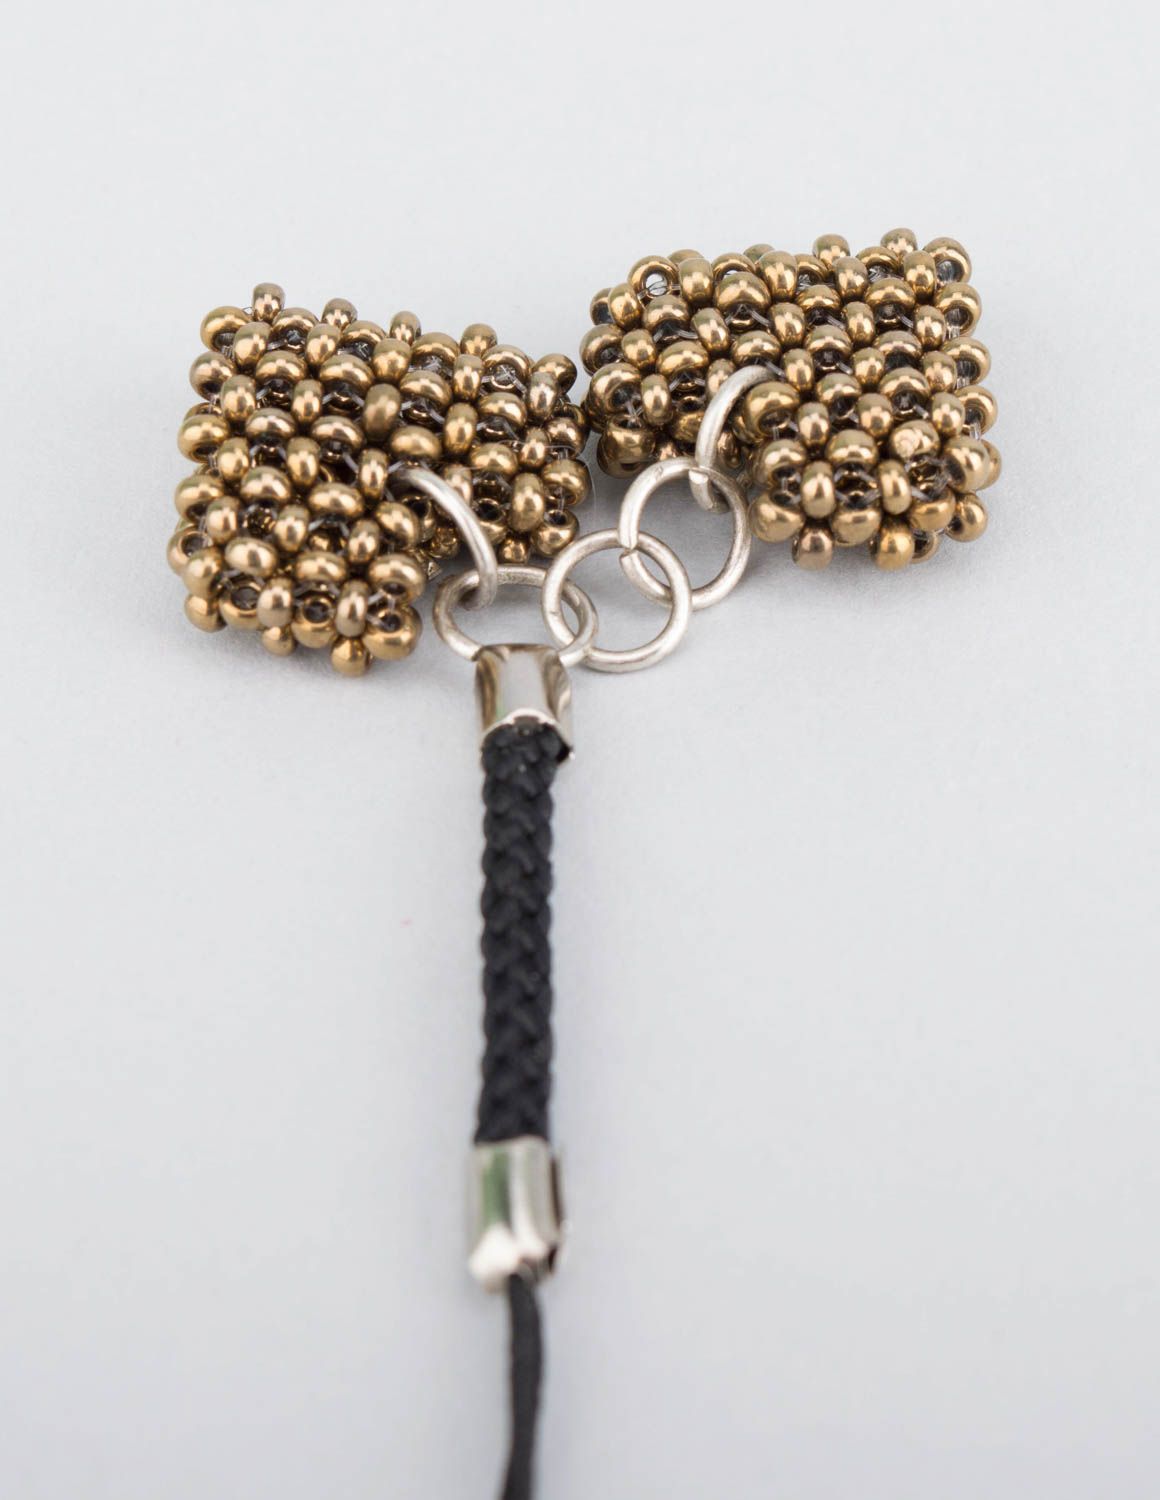 Handmade key ring designer keychains cell phone charm gift ideas for girls photo 5